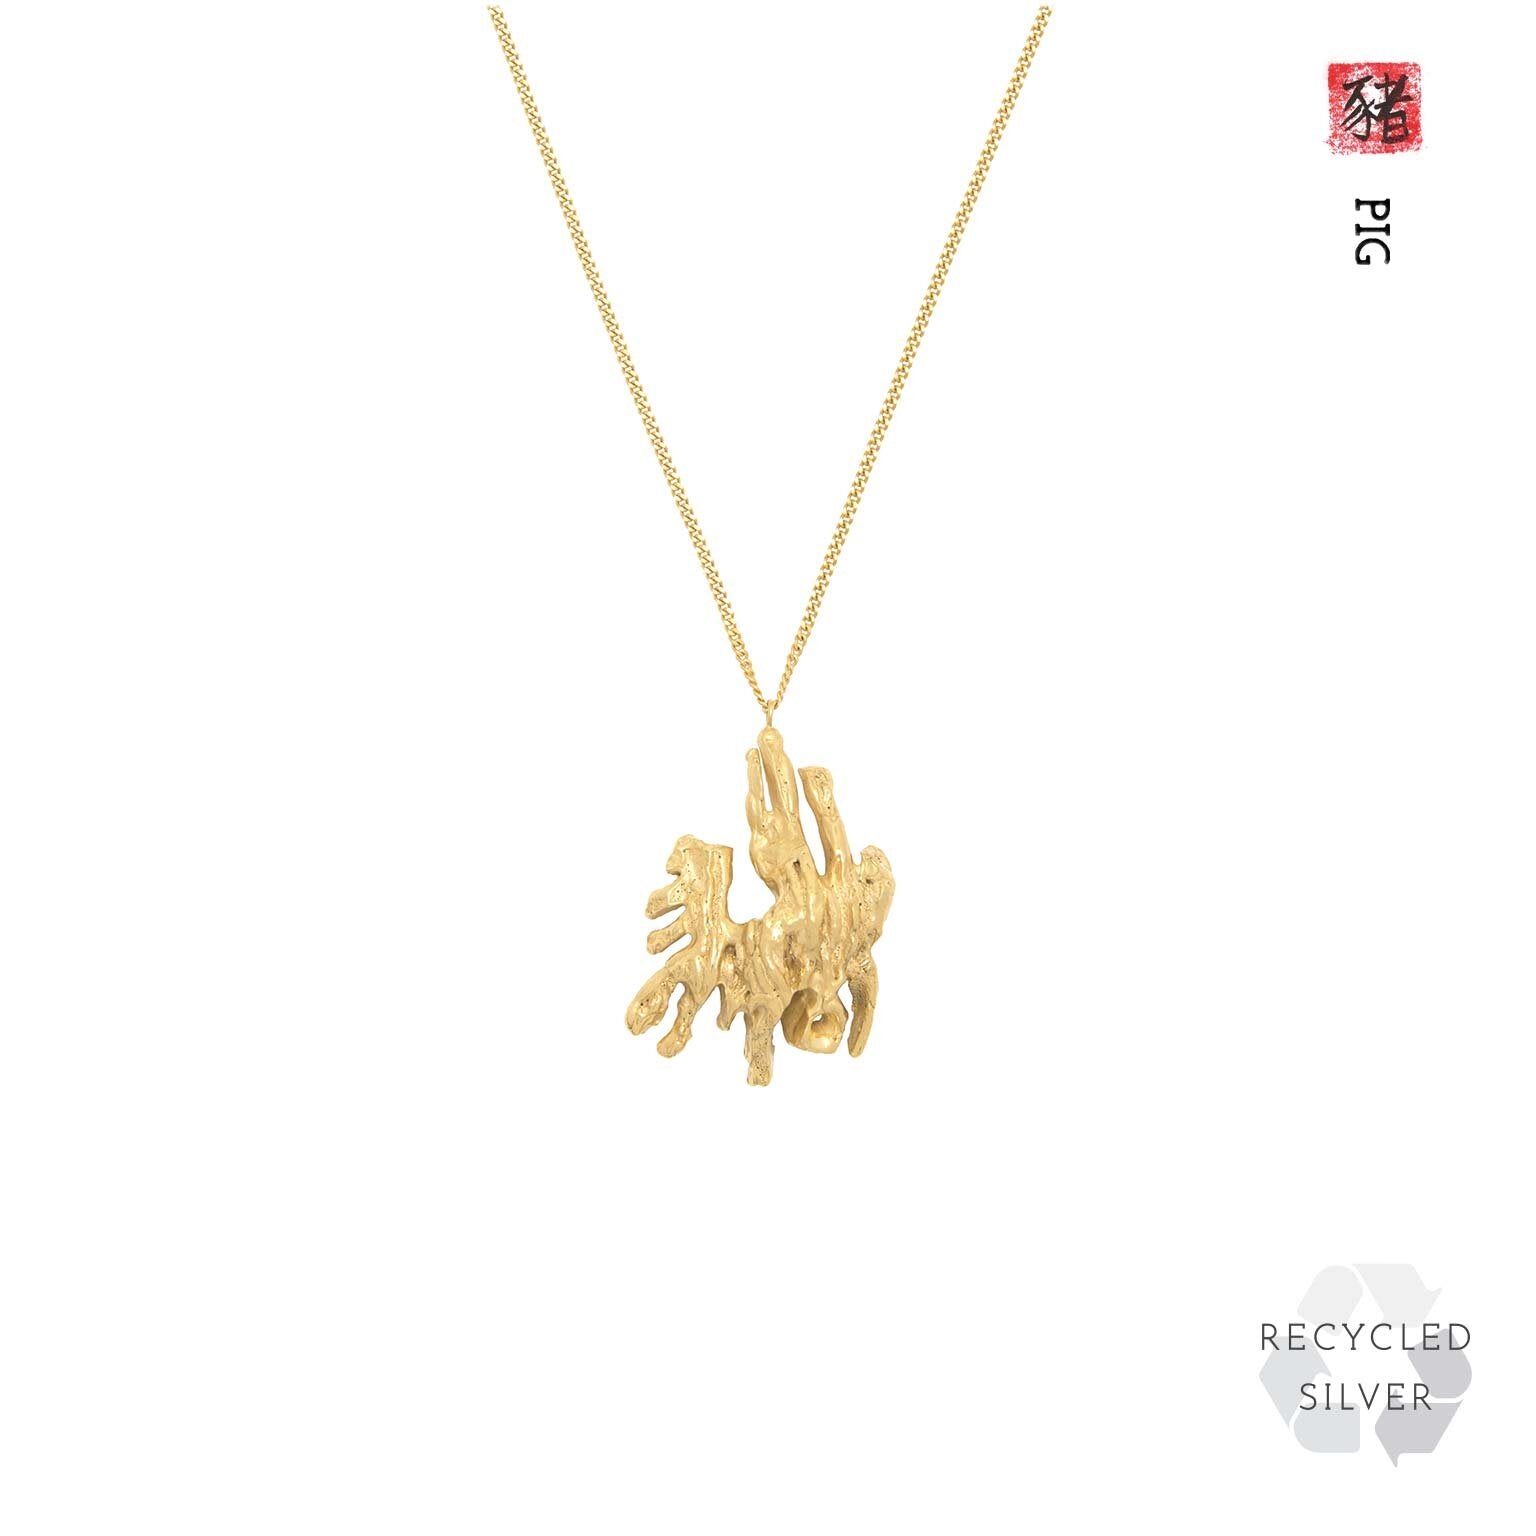 Chinese Zodiac Carved Bone Disc Beads Rosary BBE219Z – Leekan Designs